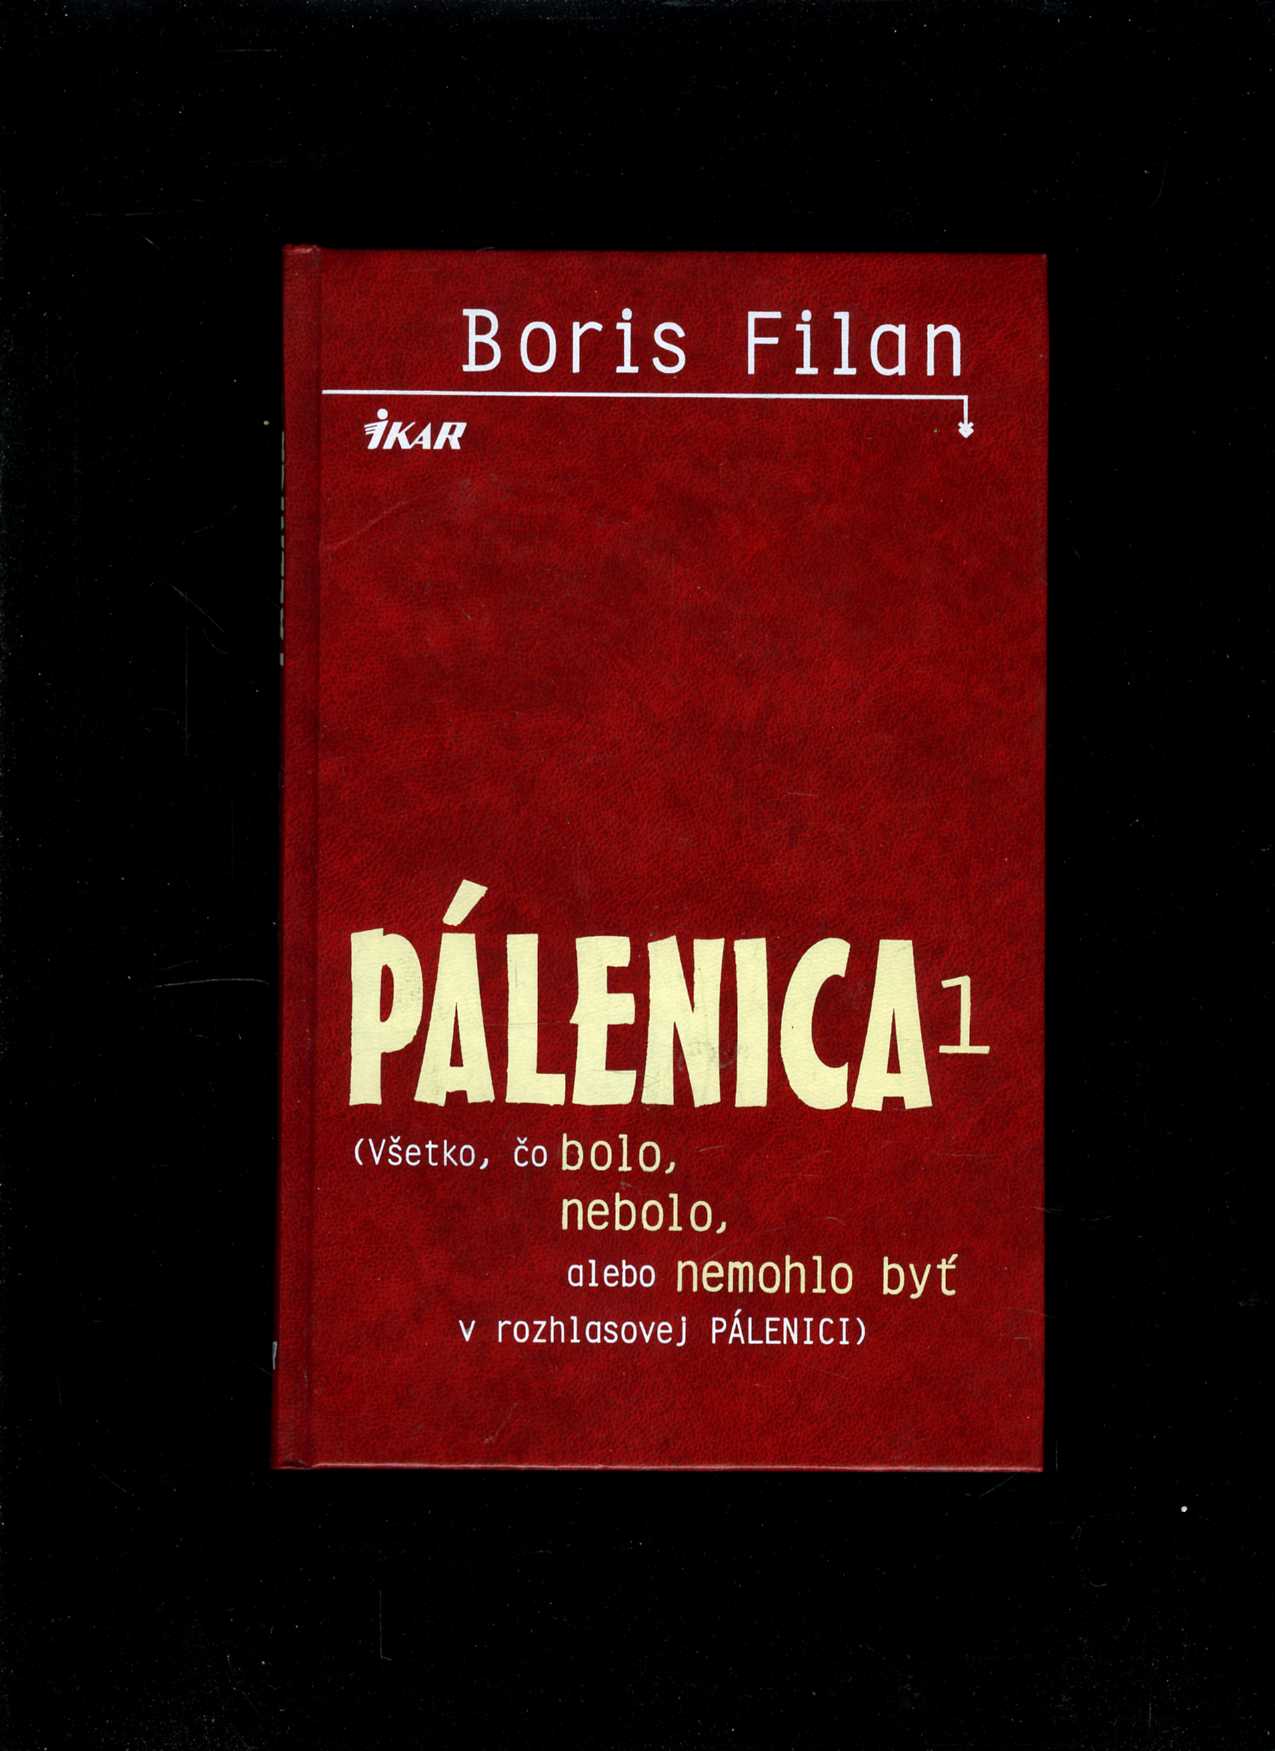 Pálenica 1 (Boris Filan)